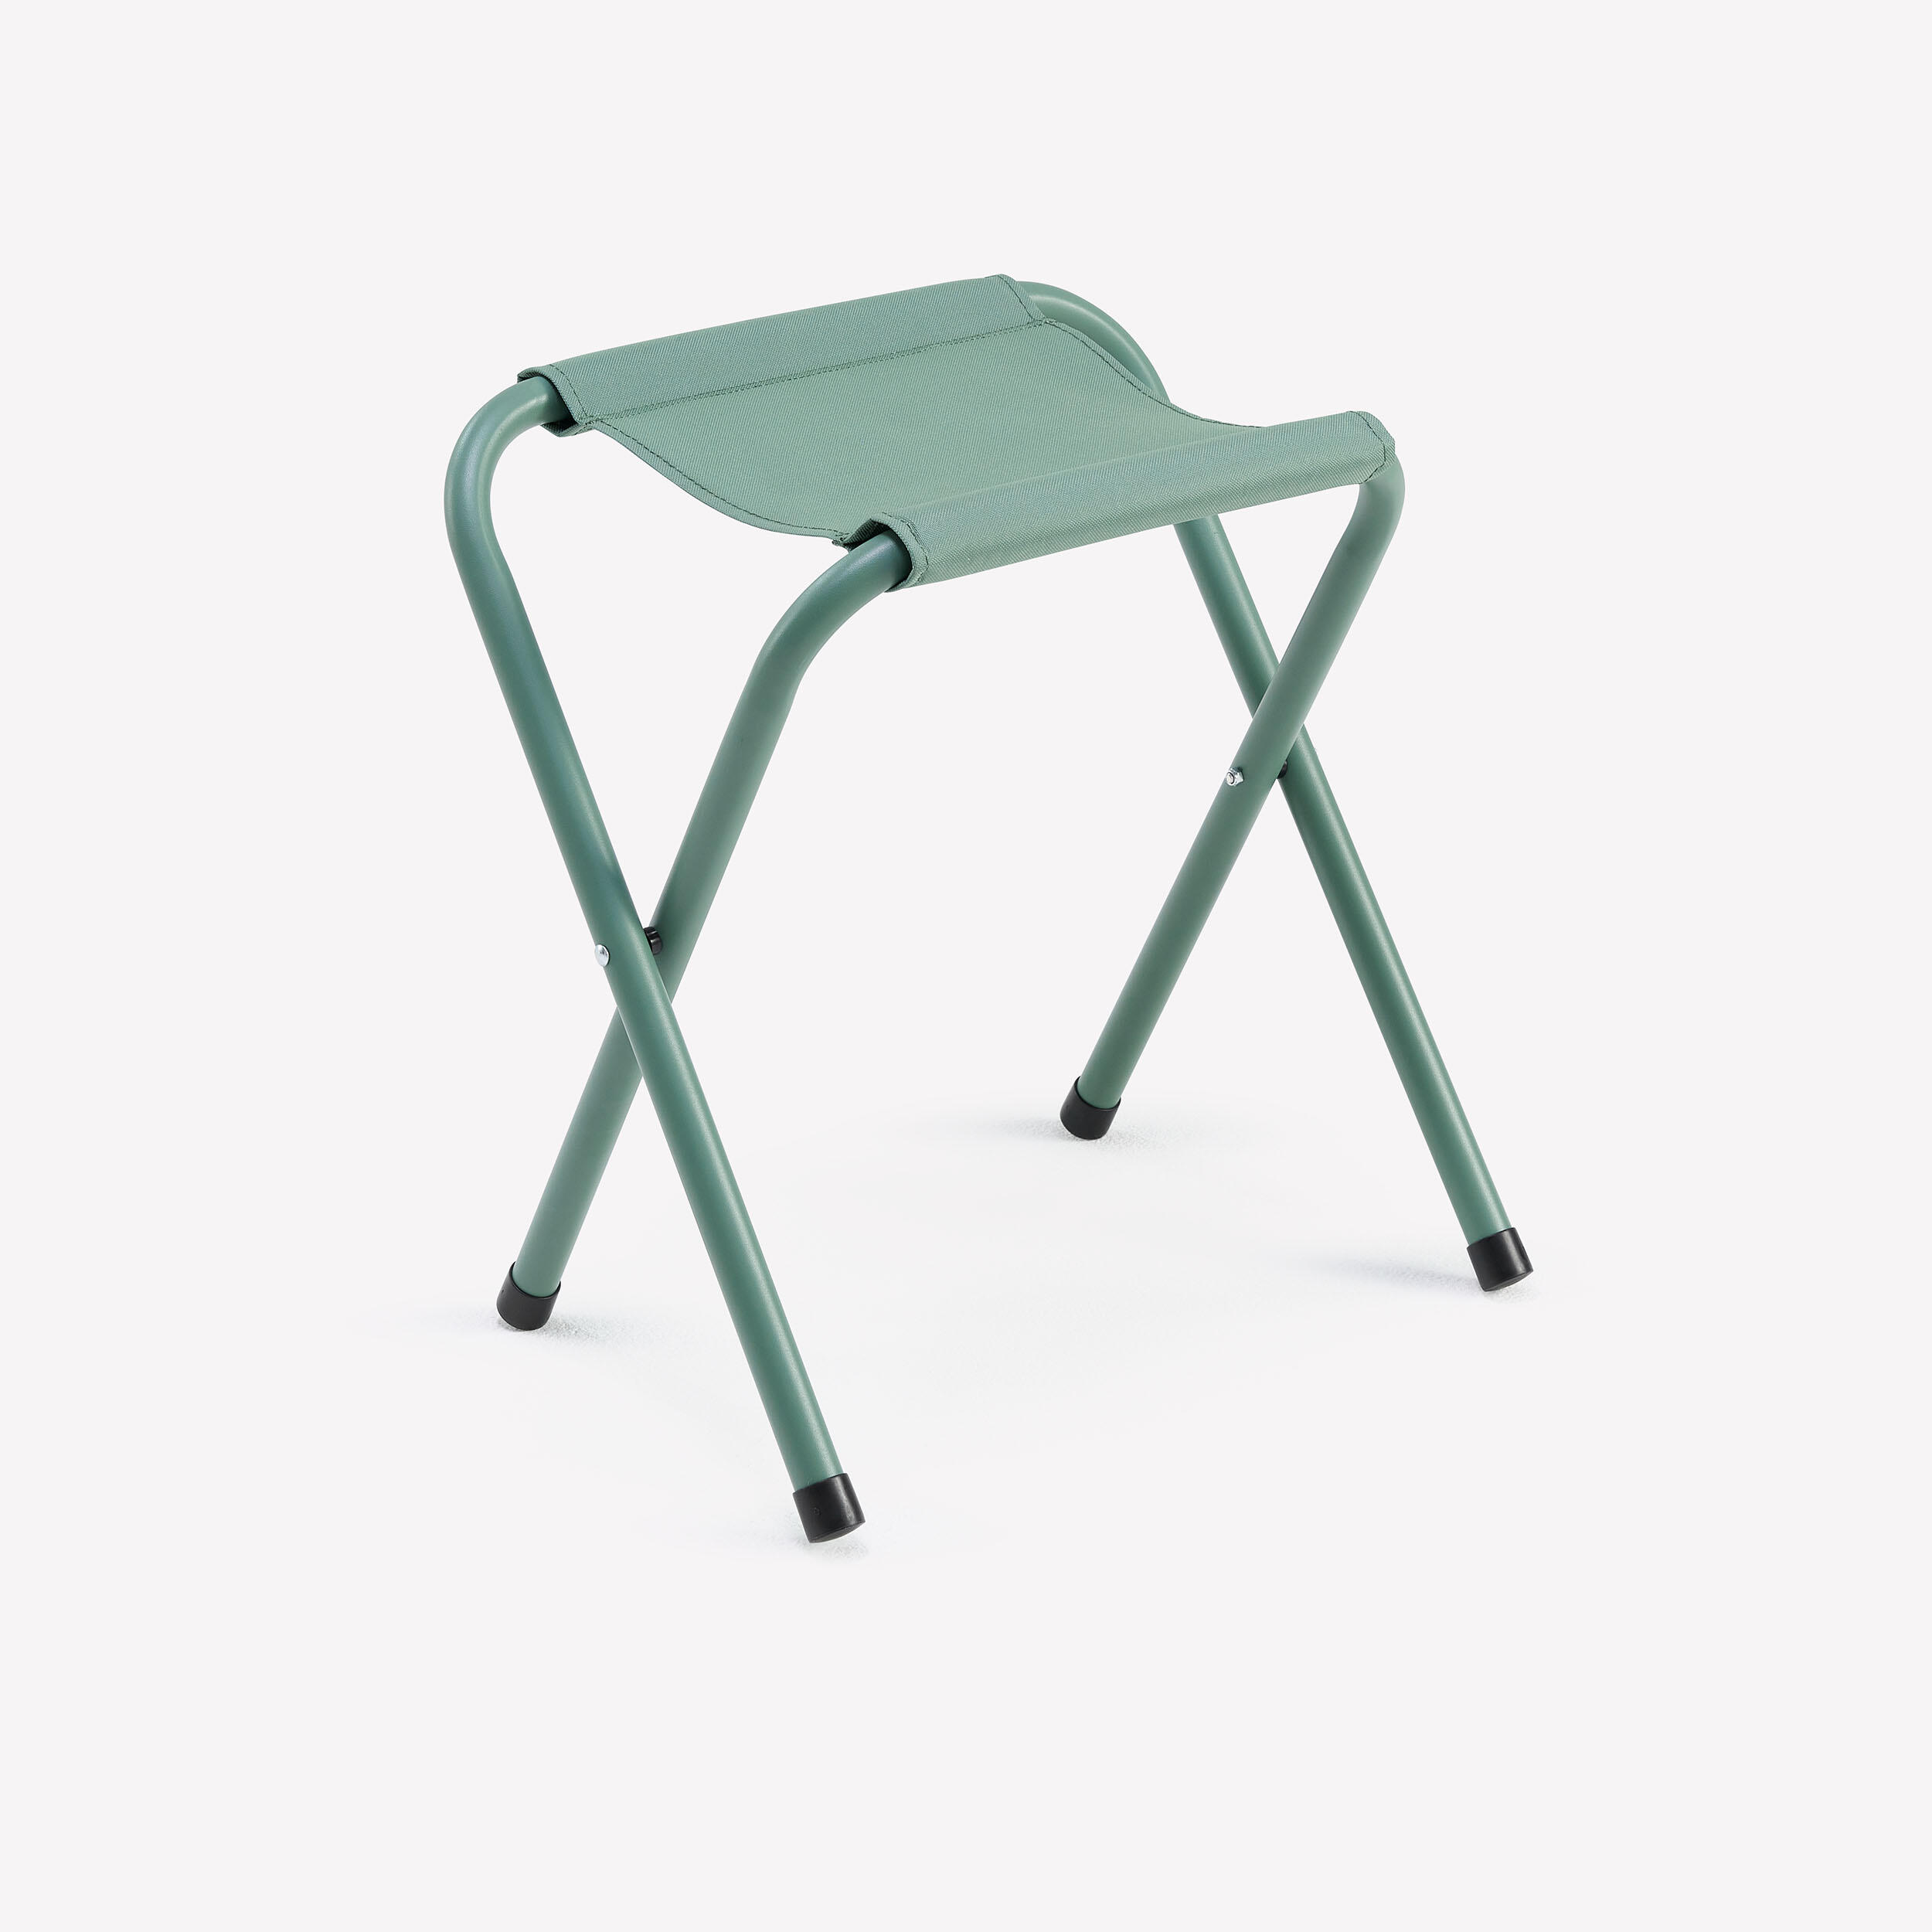 QUECHUA Folding camping stool - green